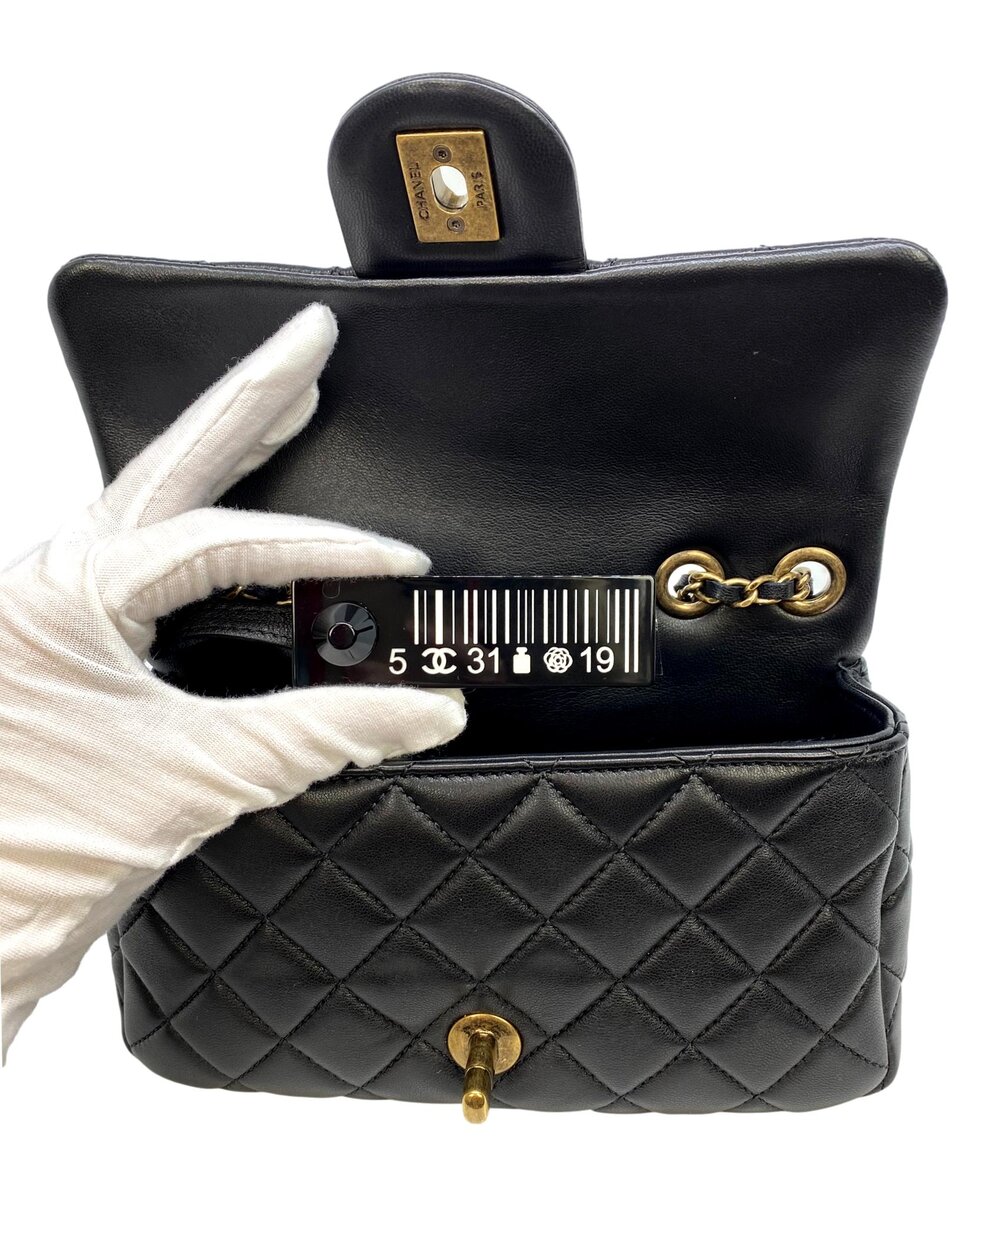 Burglars snatch pricey purses at Chanel in Galleria